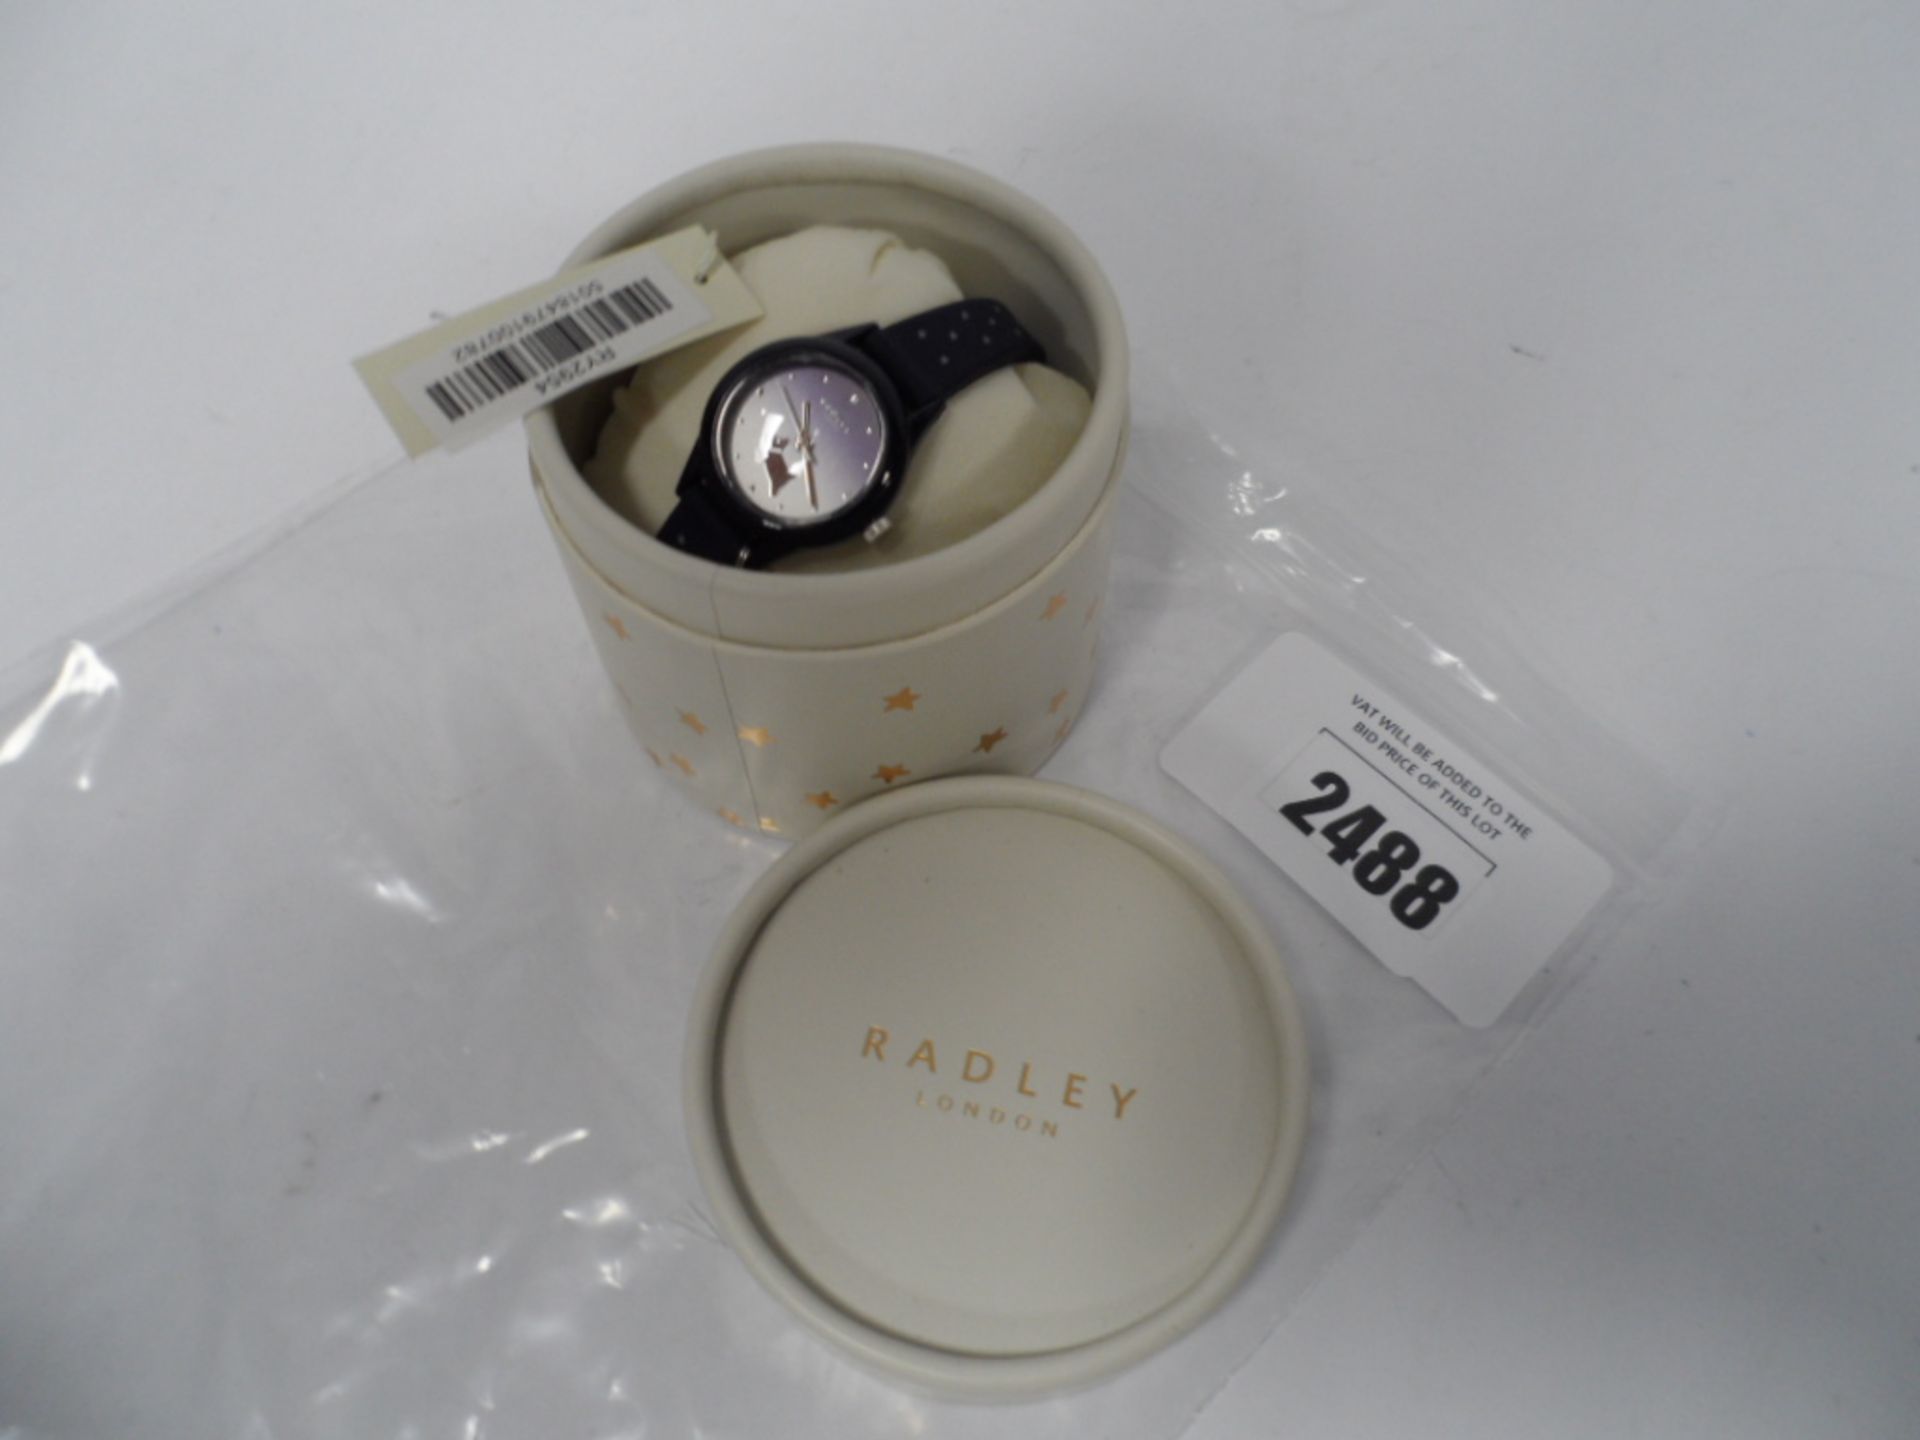 Radley watch with case model RY2954.